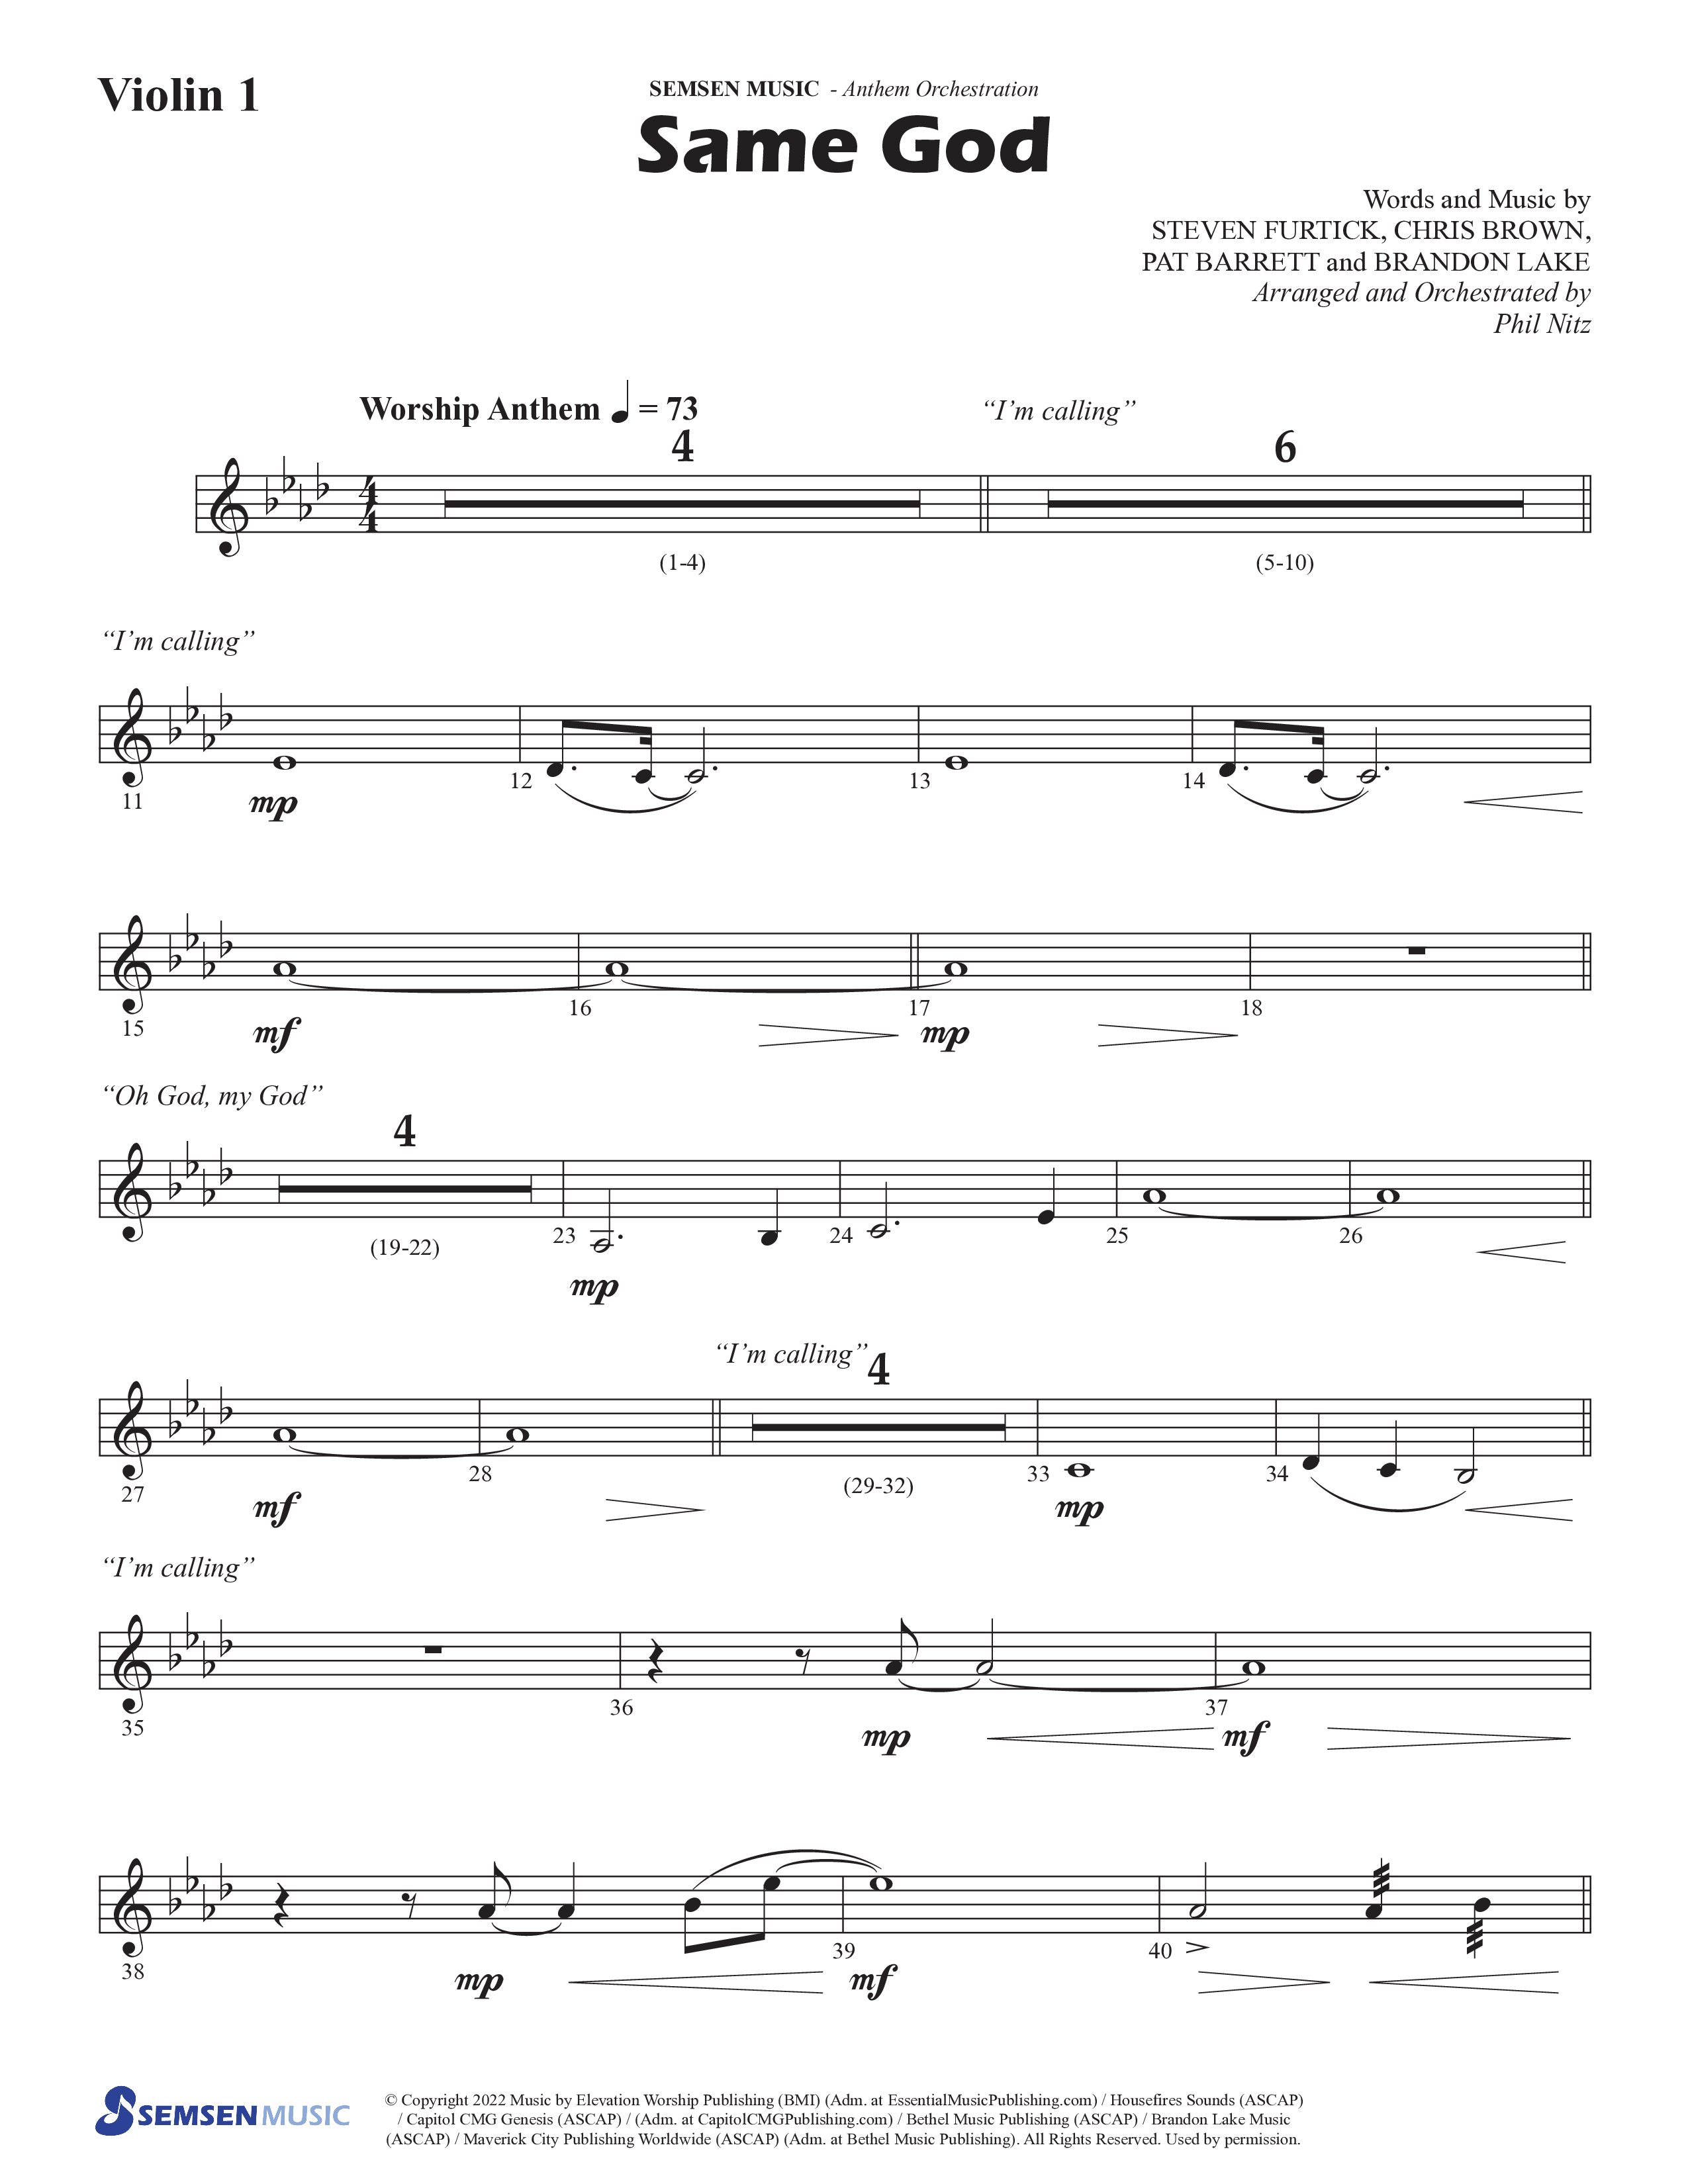 Same God (Choral Anthem SATB) Violin 1 (Semsen Music / Arr. Phil Nitz)